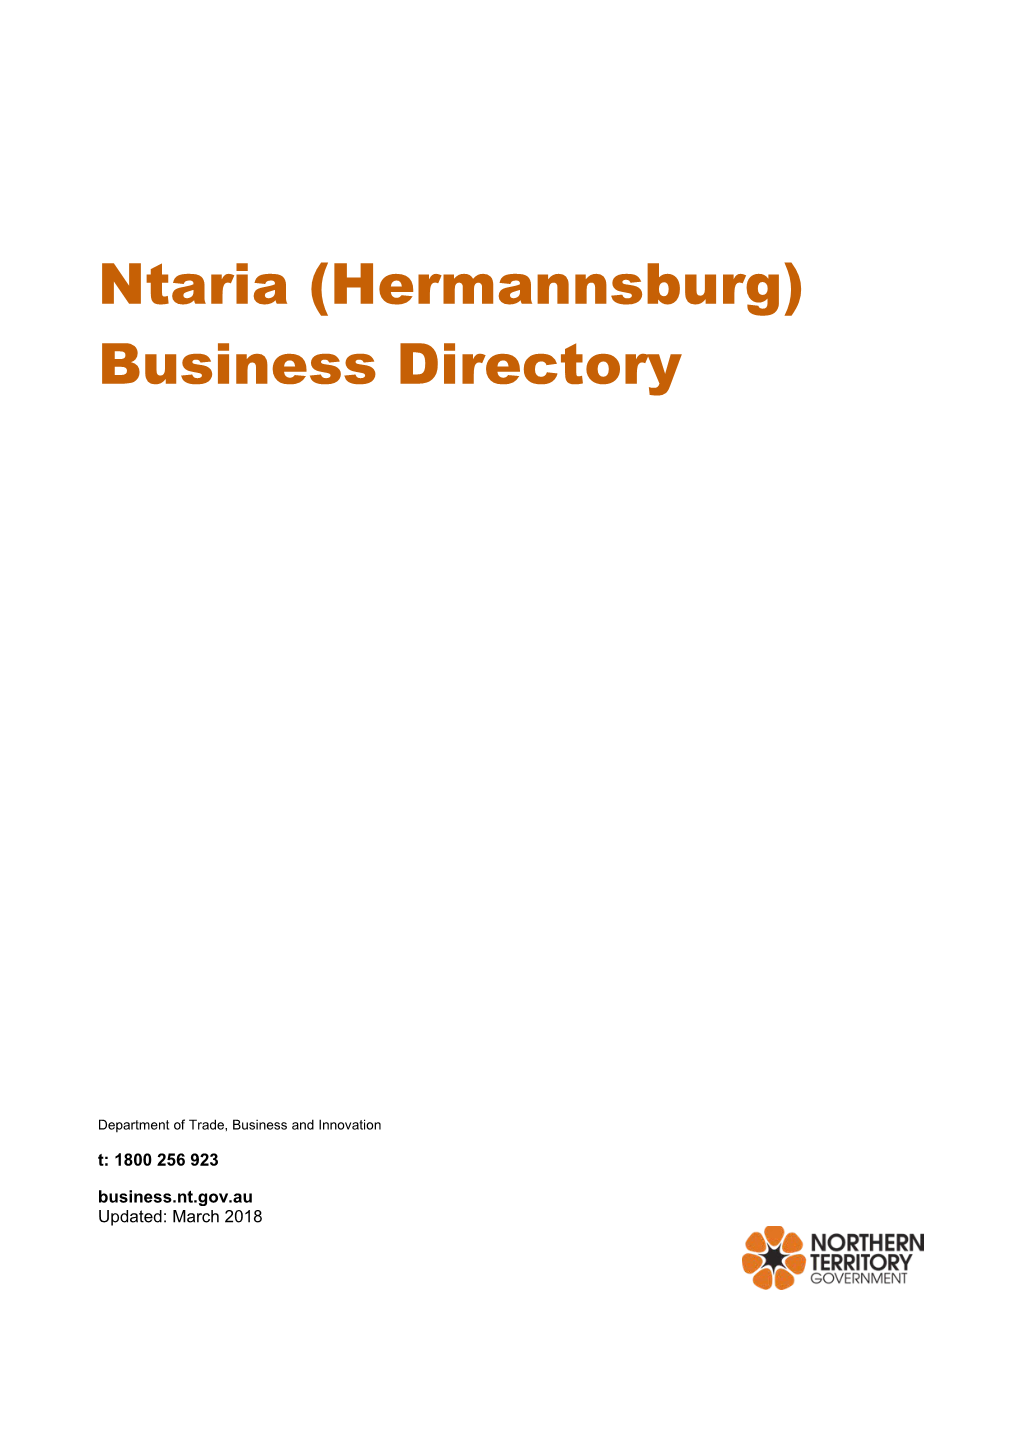 Ntaria (Hermannsburg) Business Directory